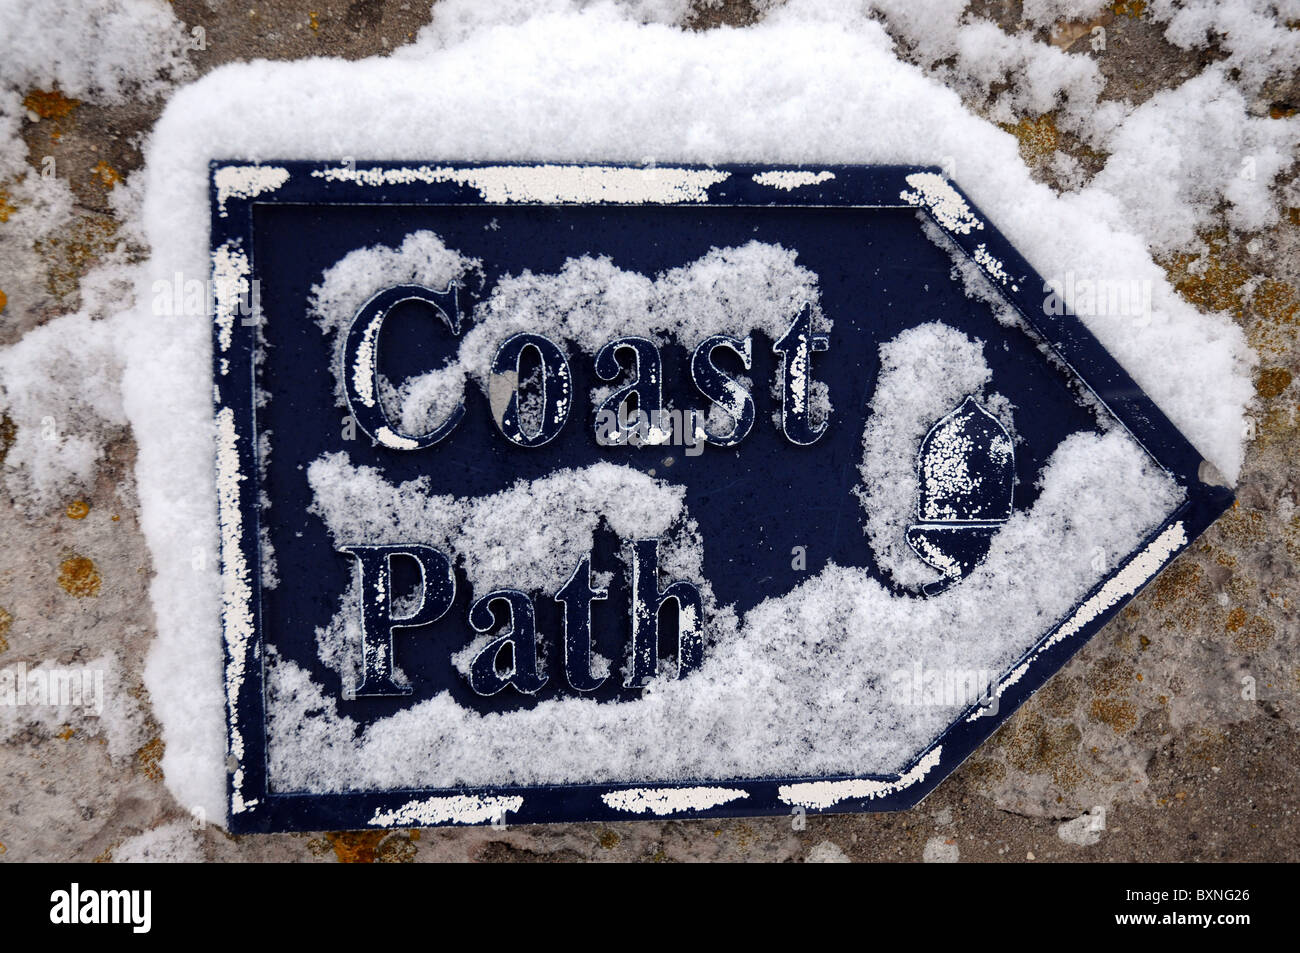 Snow on a coast path sign, UK Stock Photo